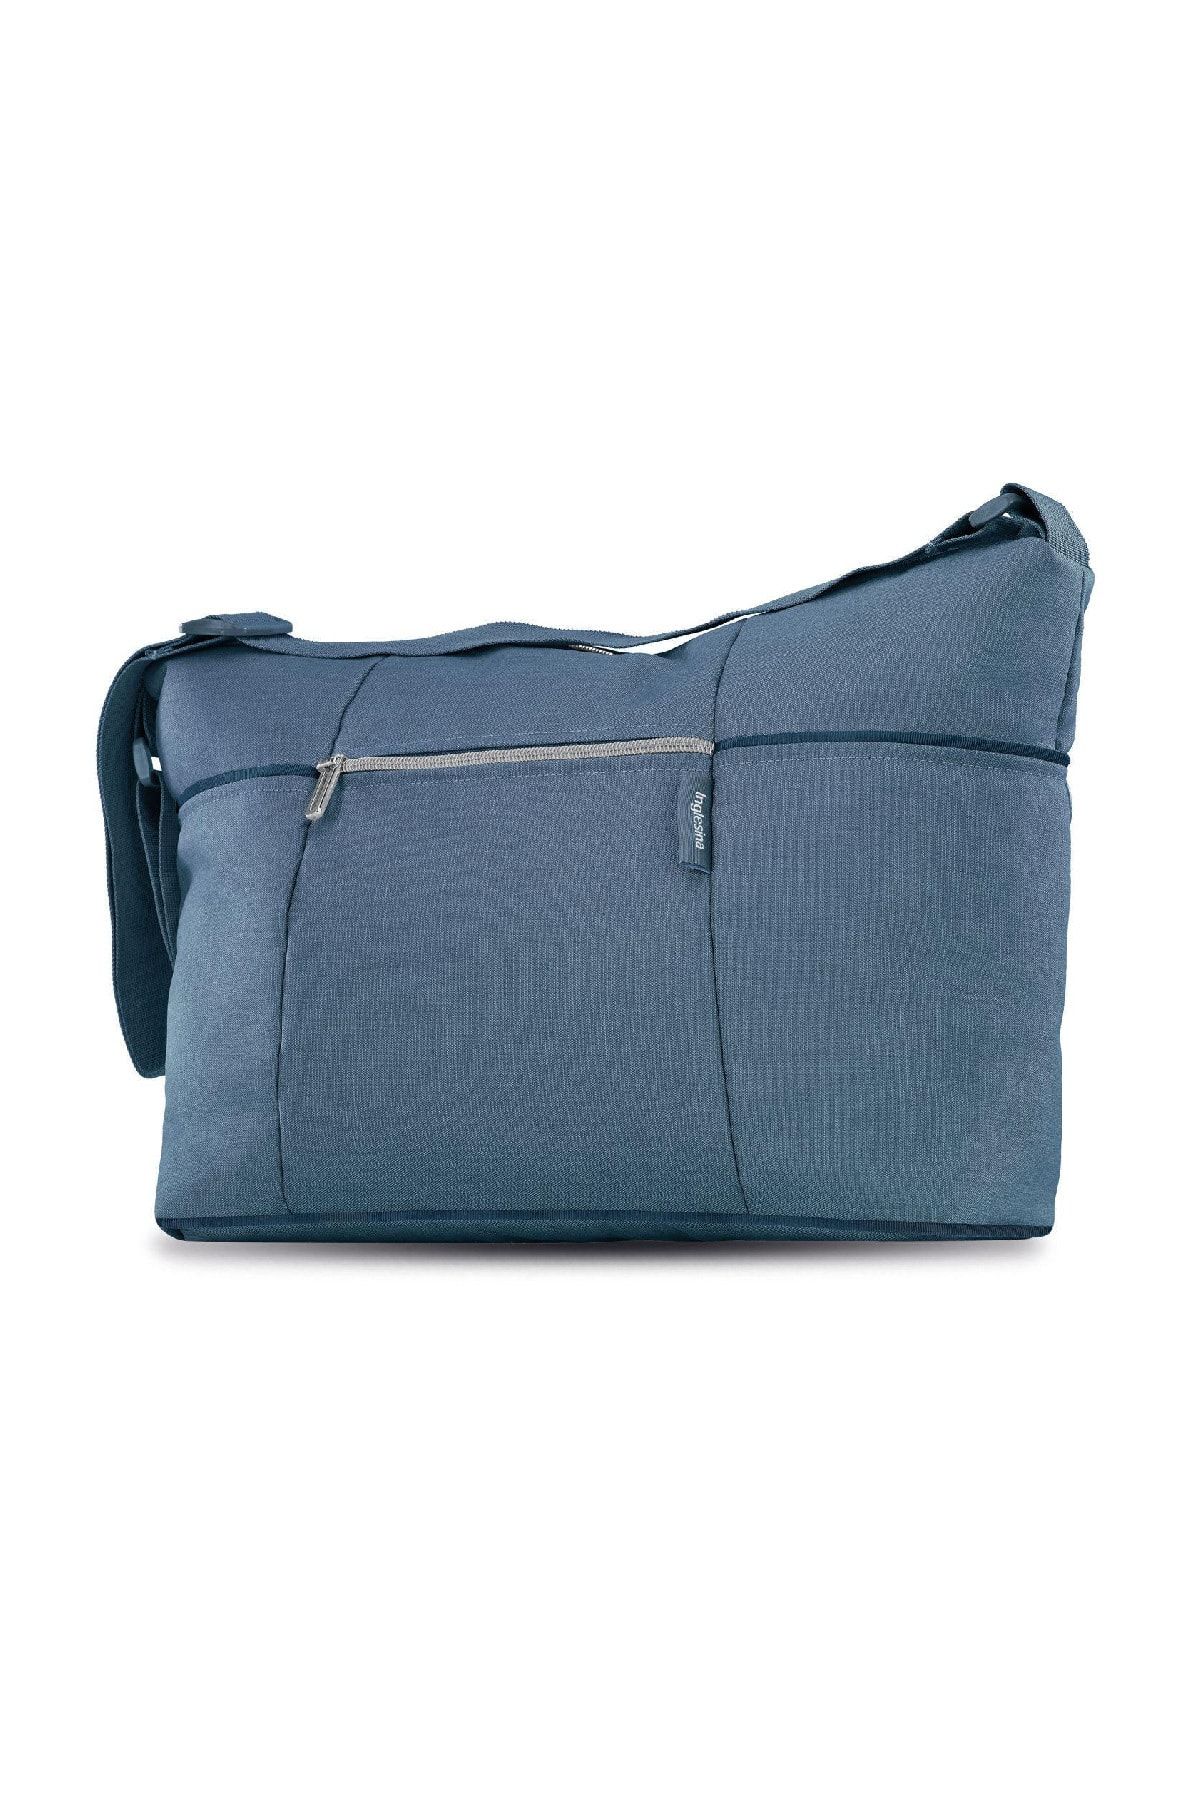 Inglesina Anne Çantası Dual Bag - Artıc Blue